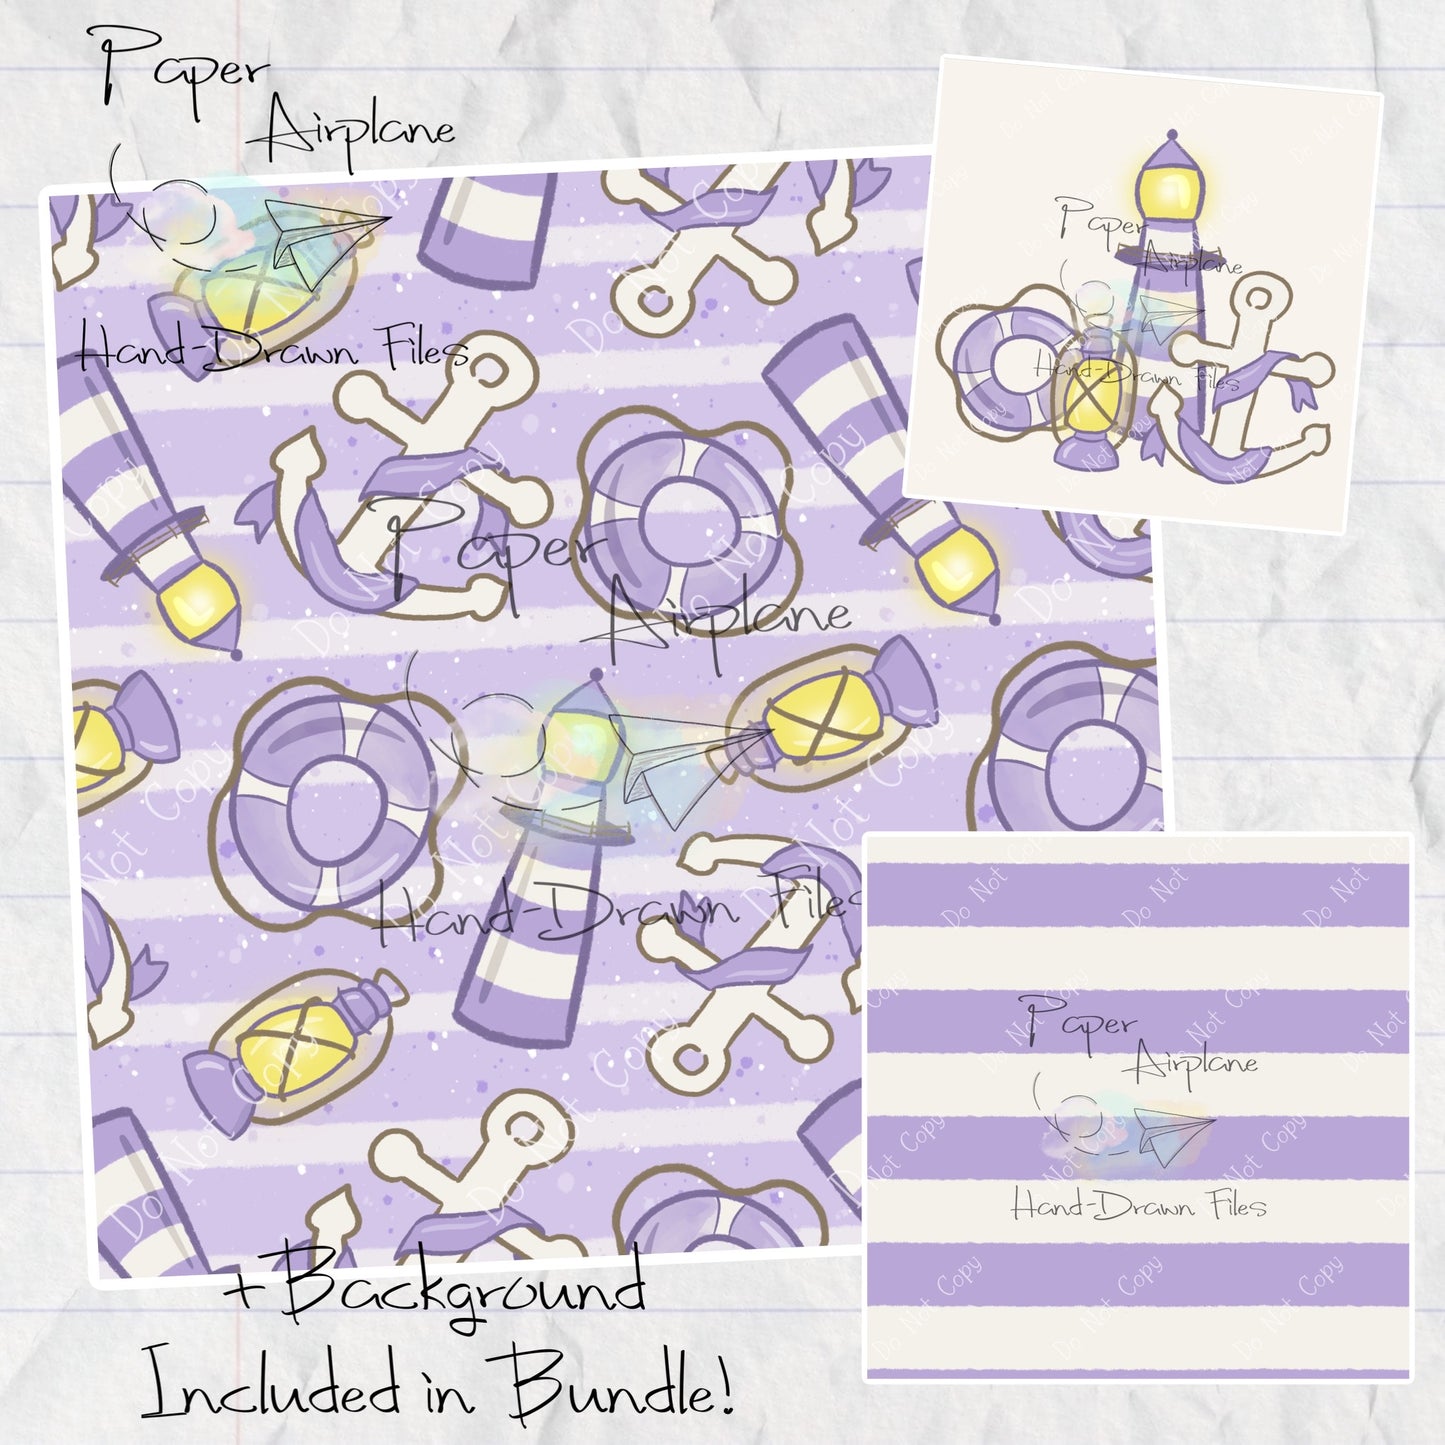 Lighthouse Keeper (Purple)